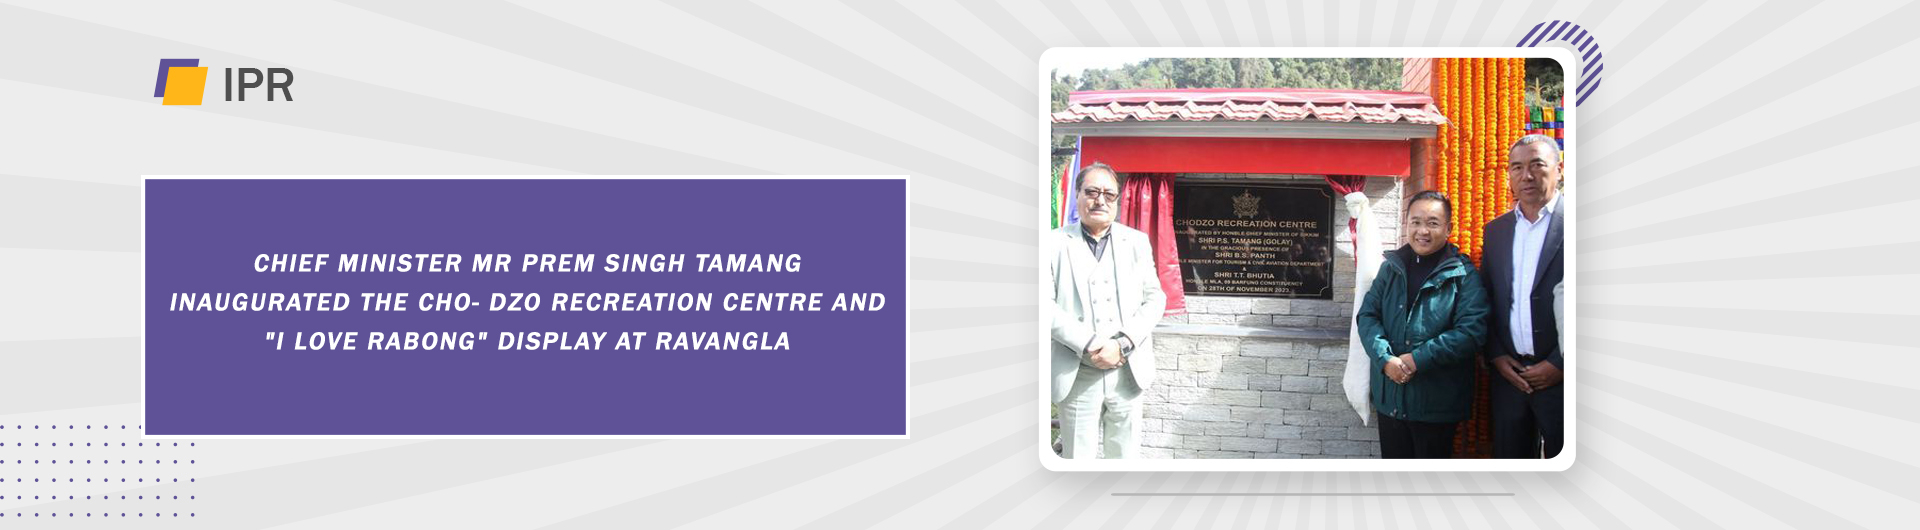 Chief Minister Mr Prem Singh Tamang inaugurated the Cho-Dzo Recreation Centre and "I Love Rabong" display at Ravangla